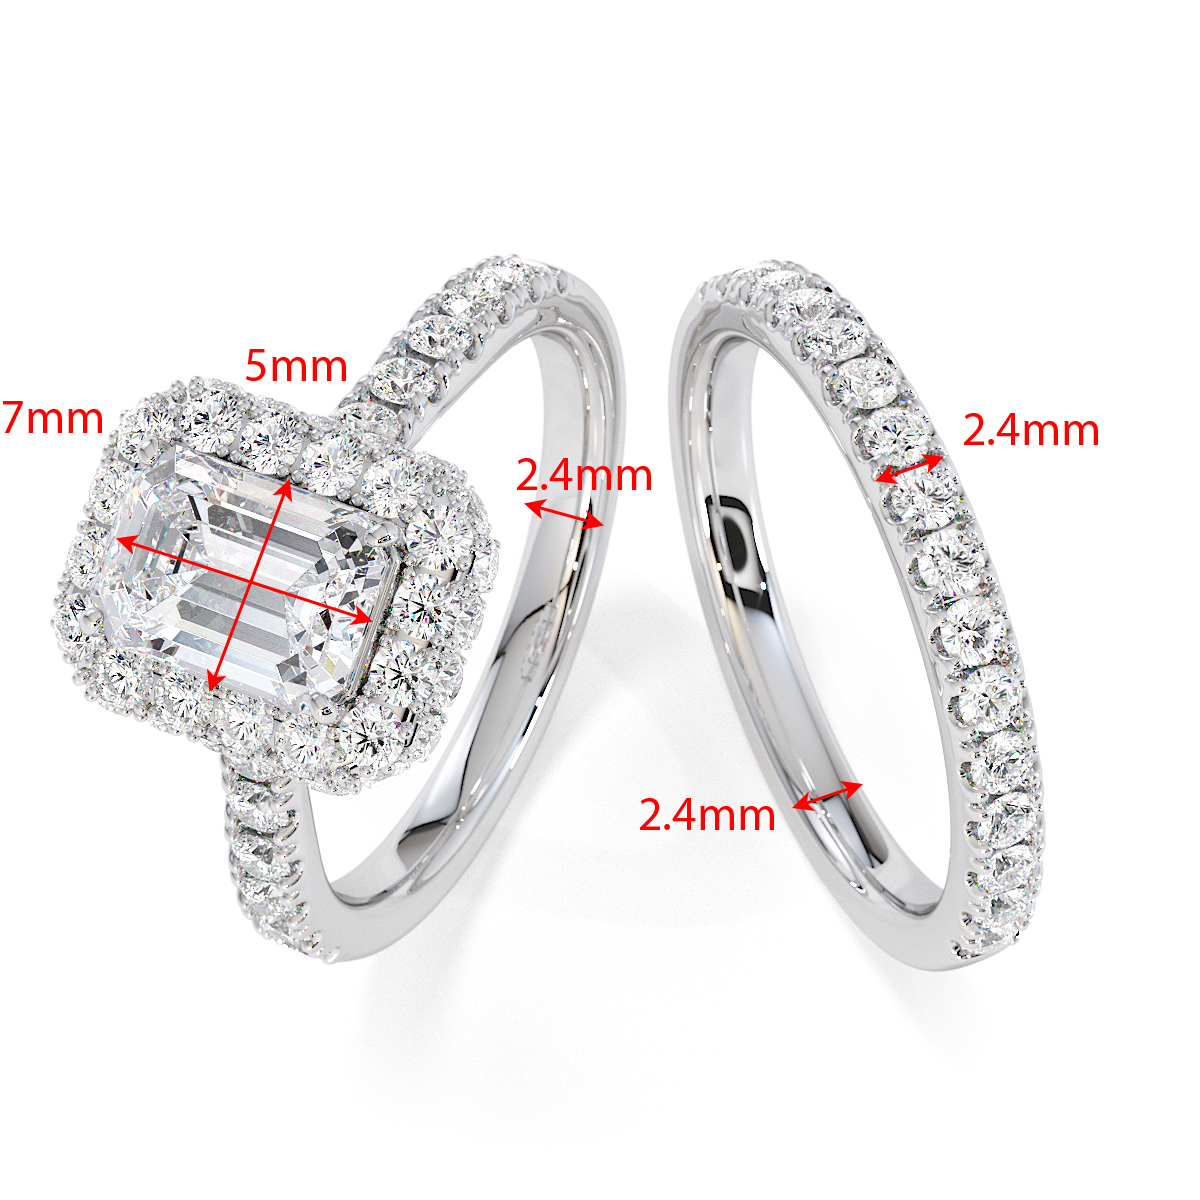 Gold / Platinum Ruby and Diamond Engagement Ring RZ3410